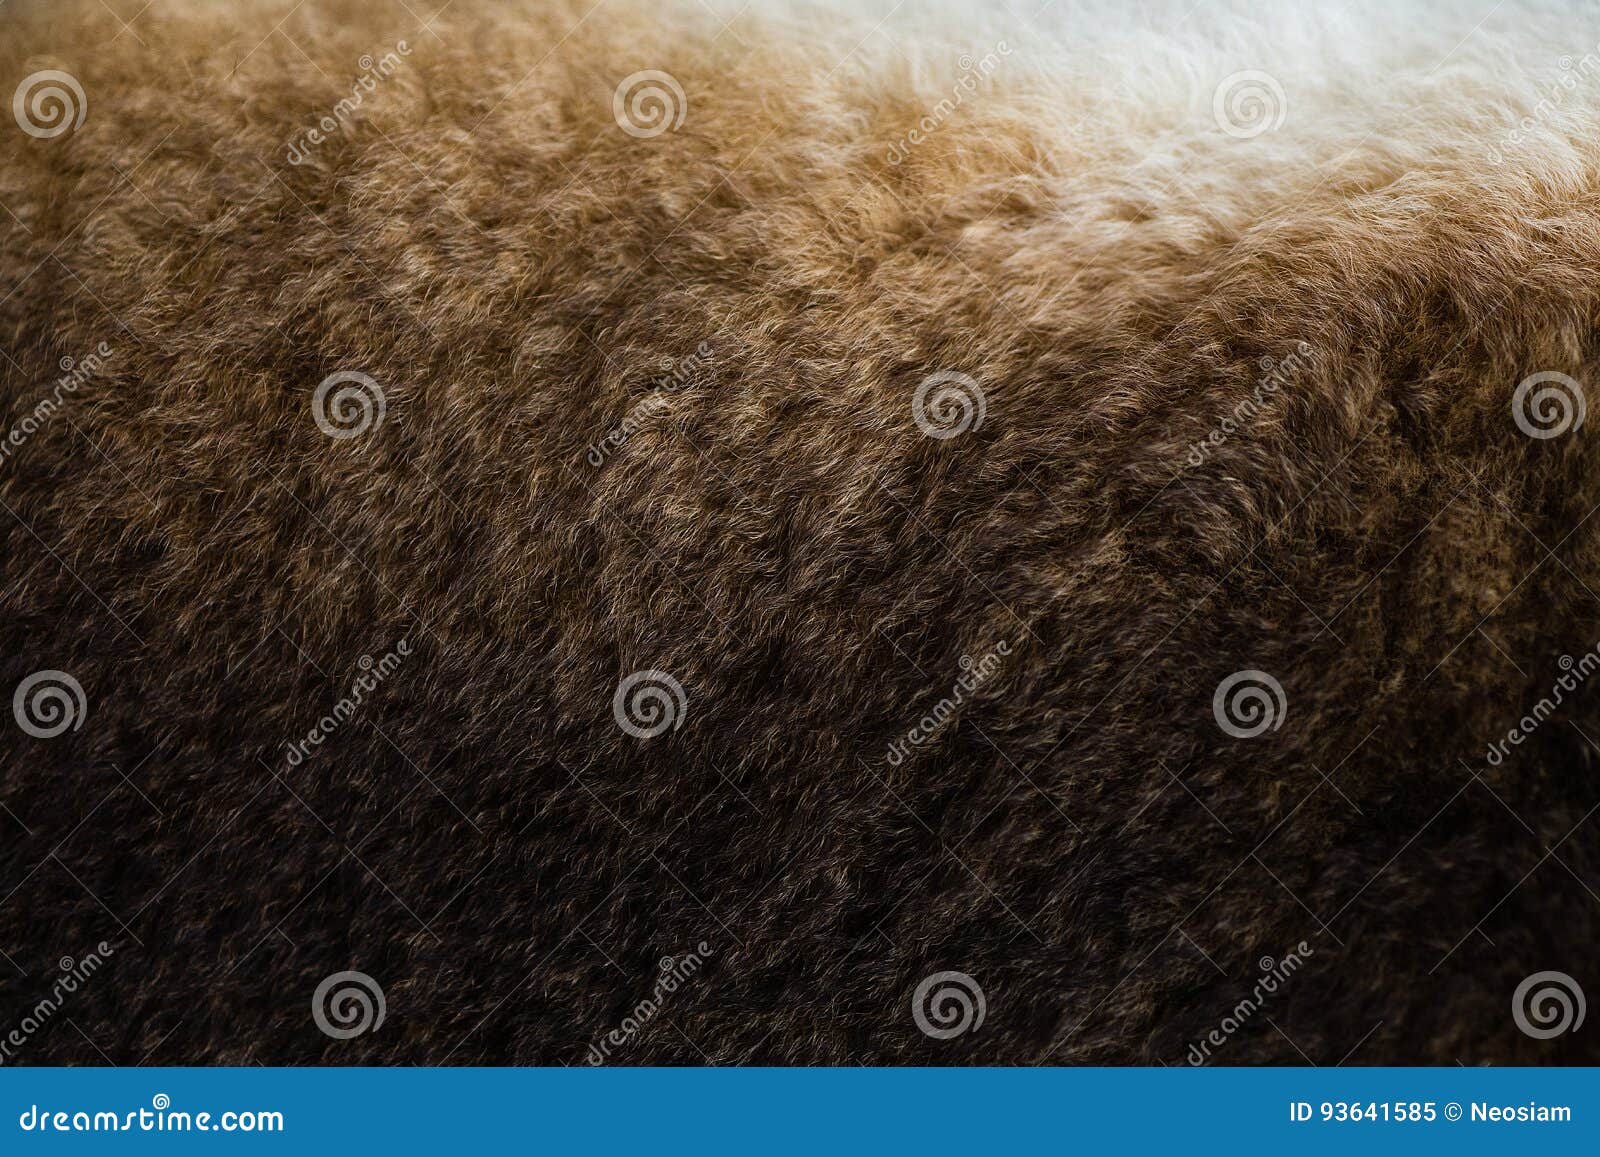 123,460 Brown Fur Texture Royalty-Free Images, Stock Photos